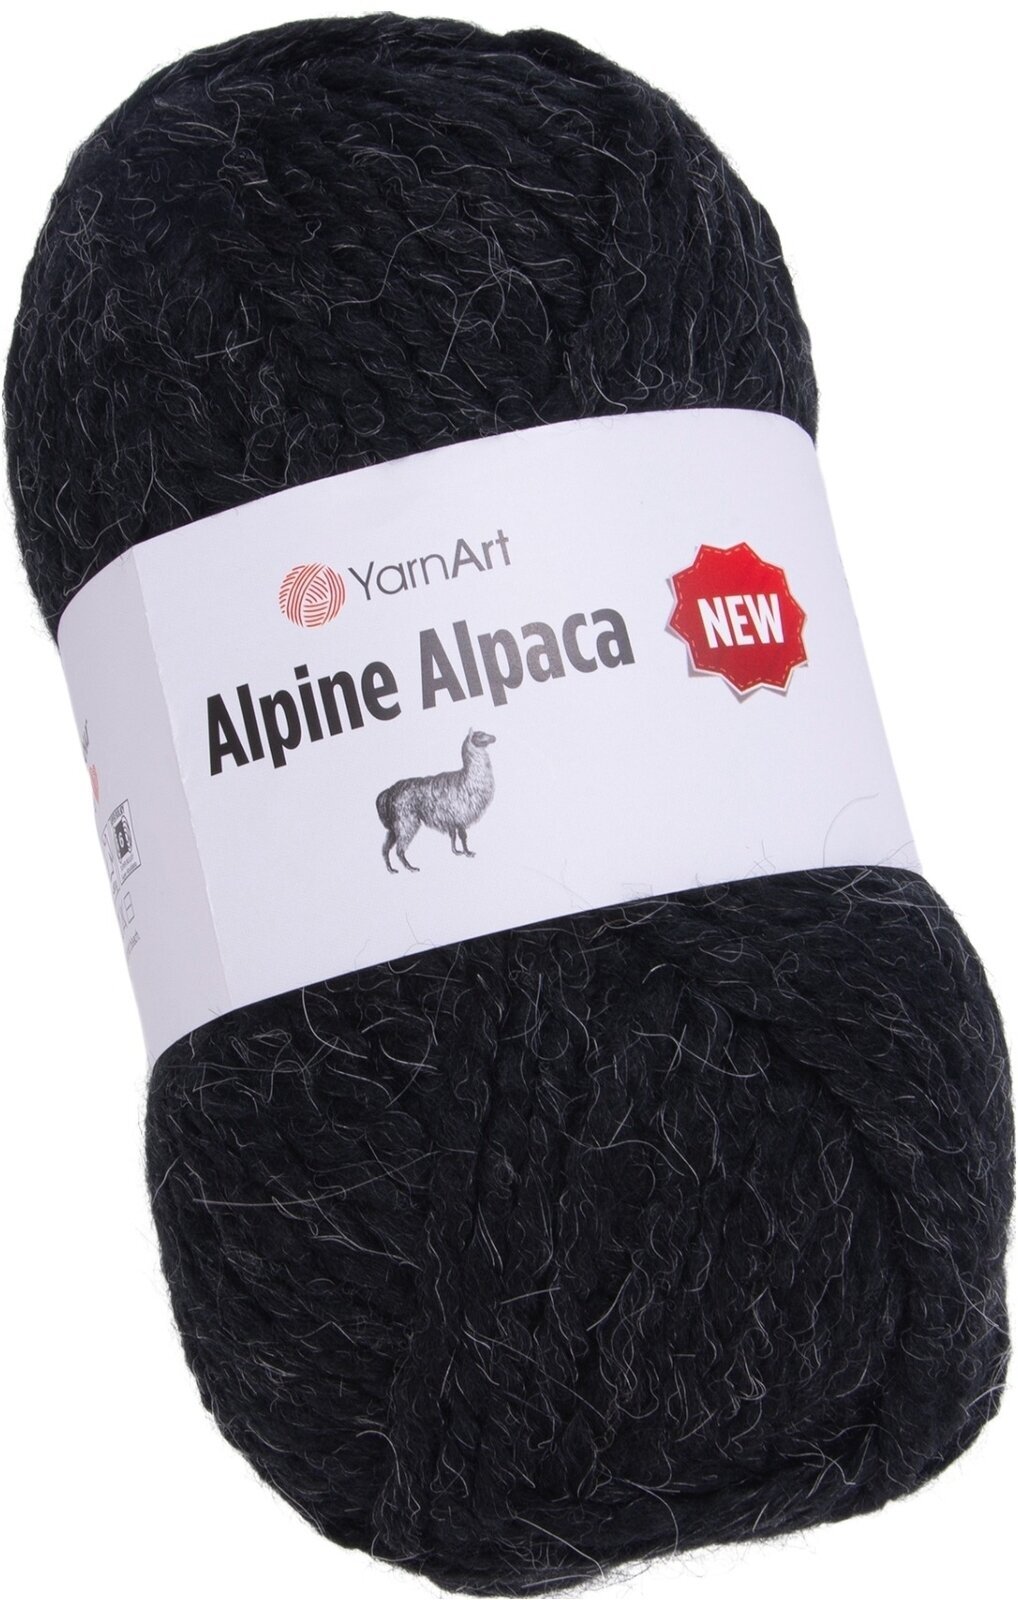 Strickgarn Yarn Art Alpine Alpaca 1439